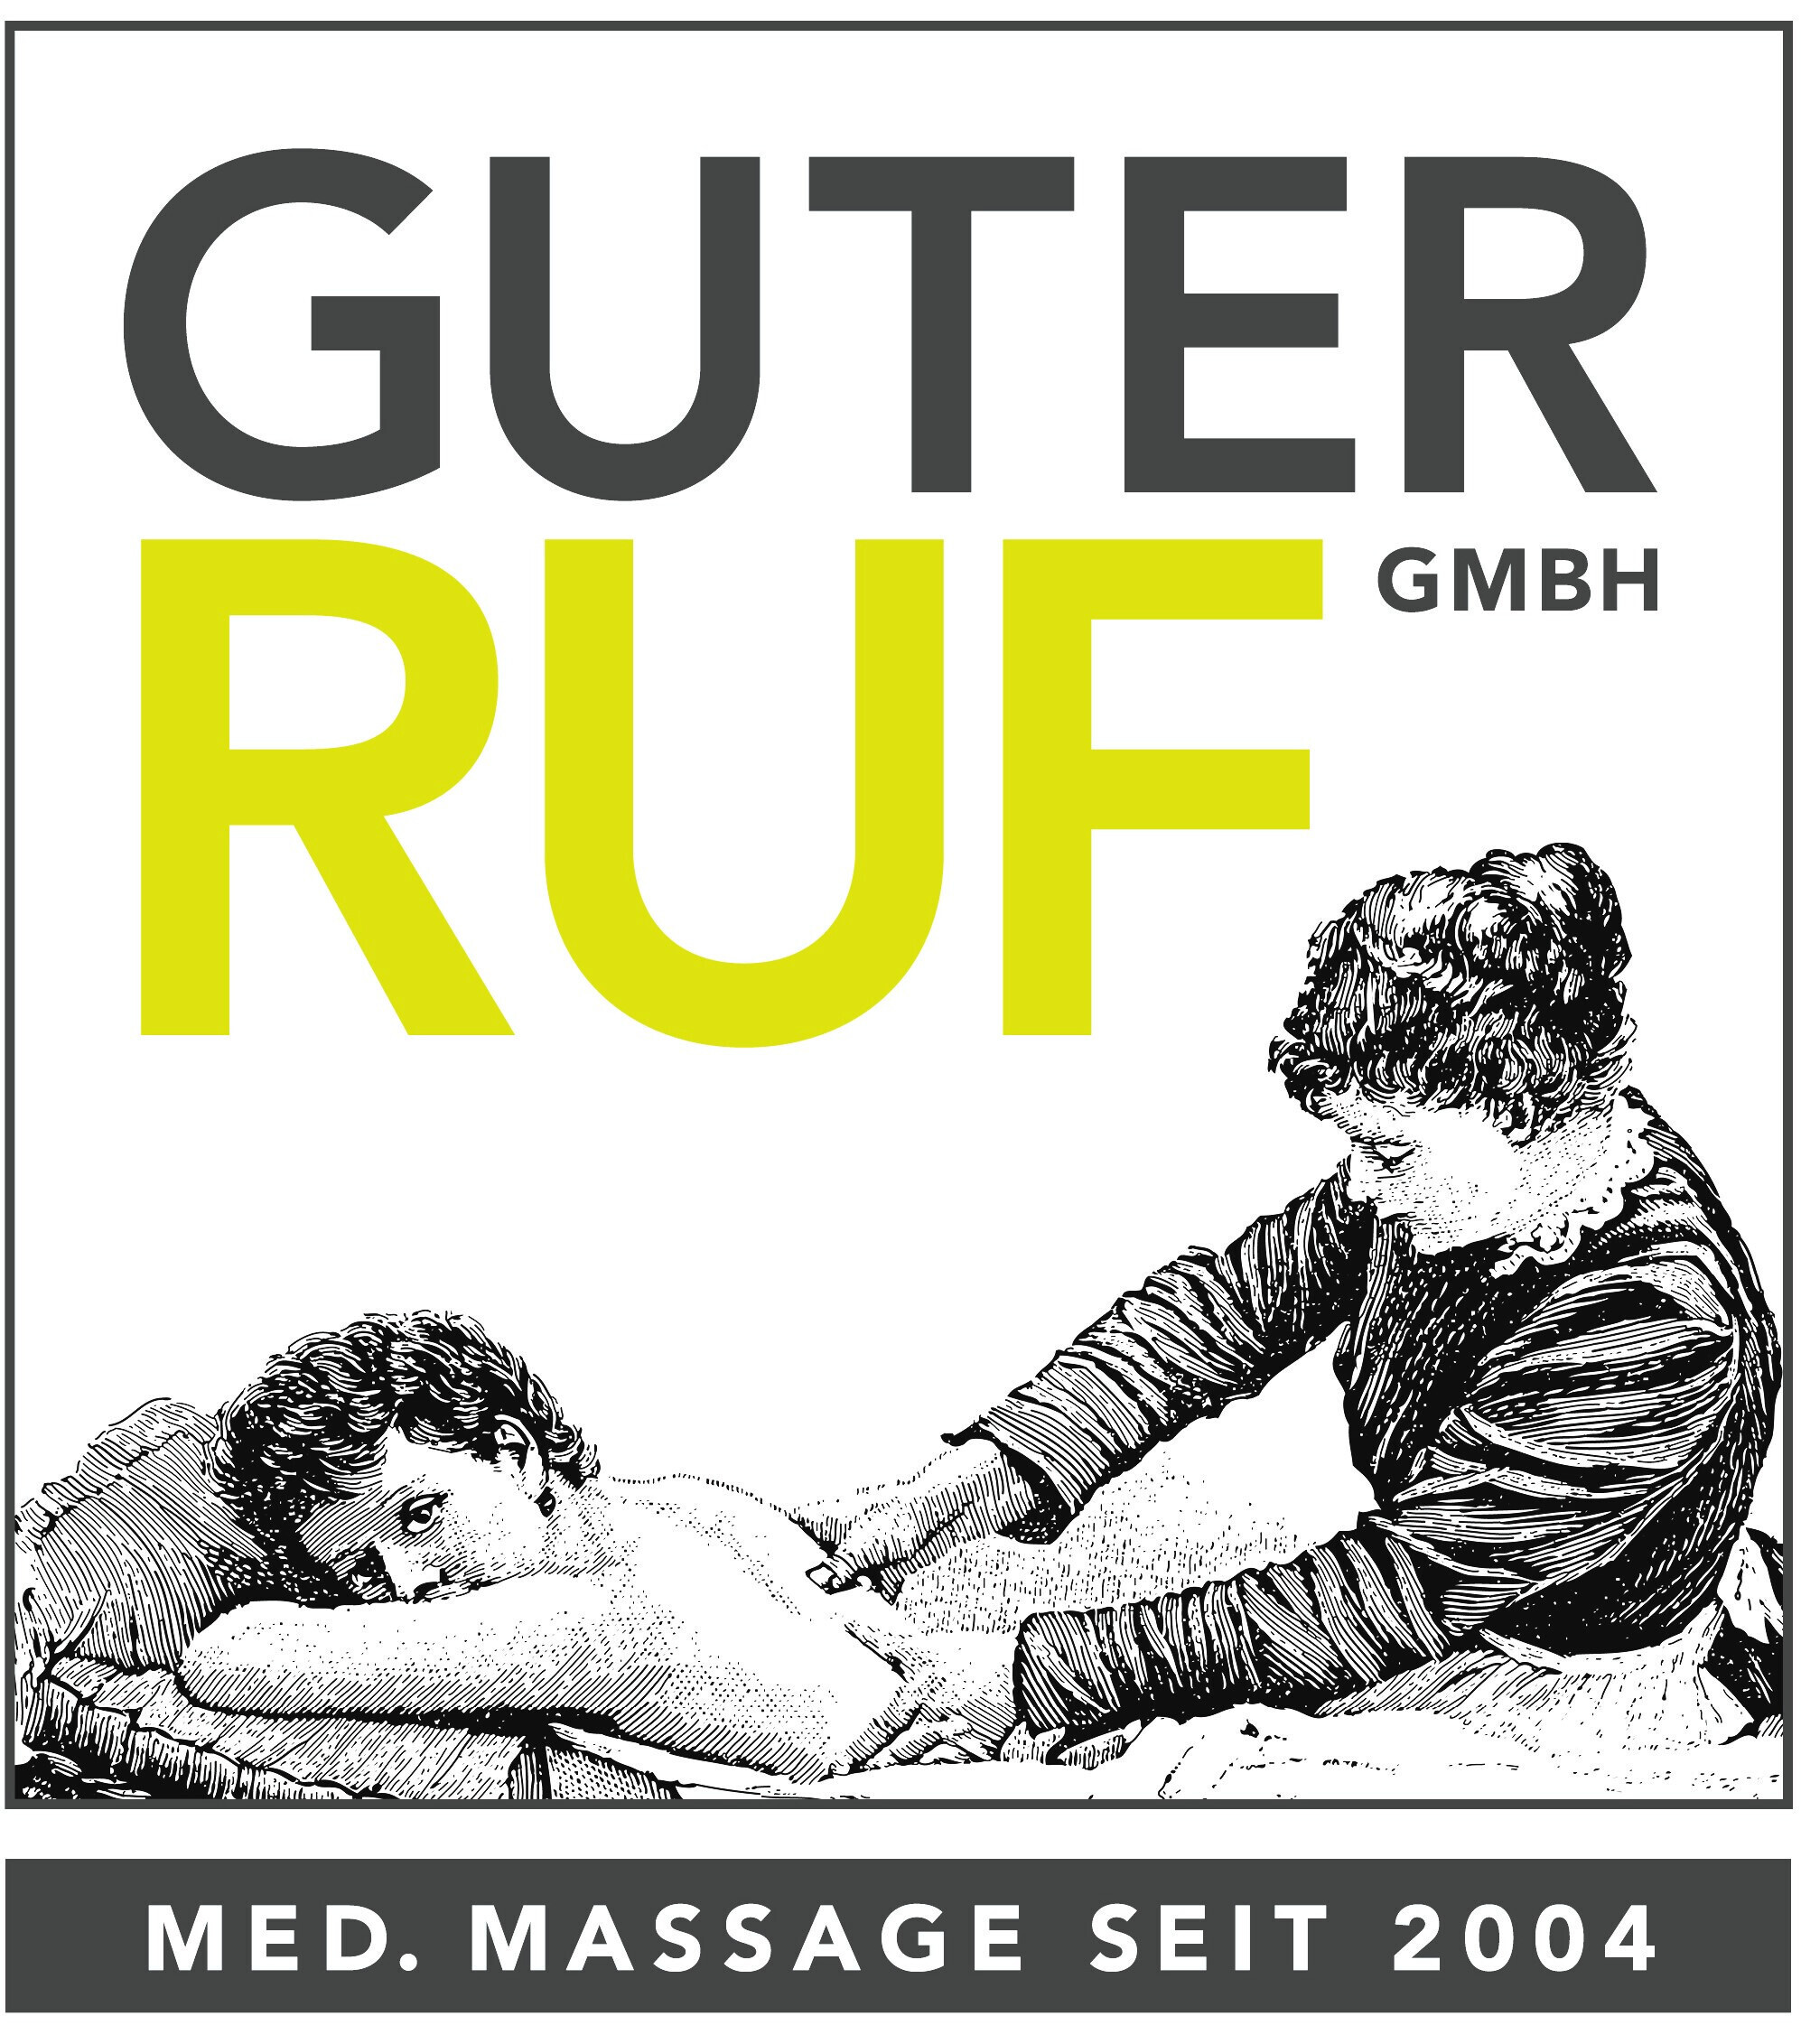 GUTER-RUF GmbH